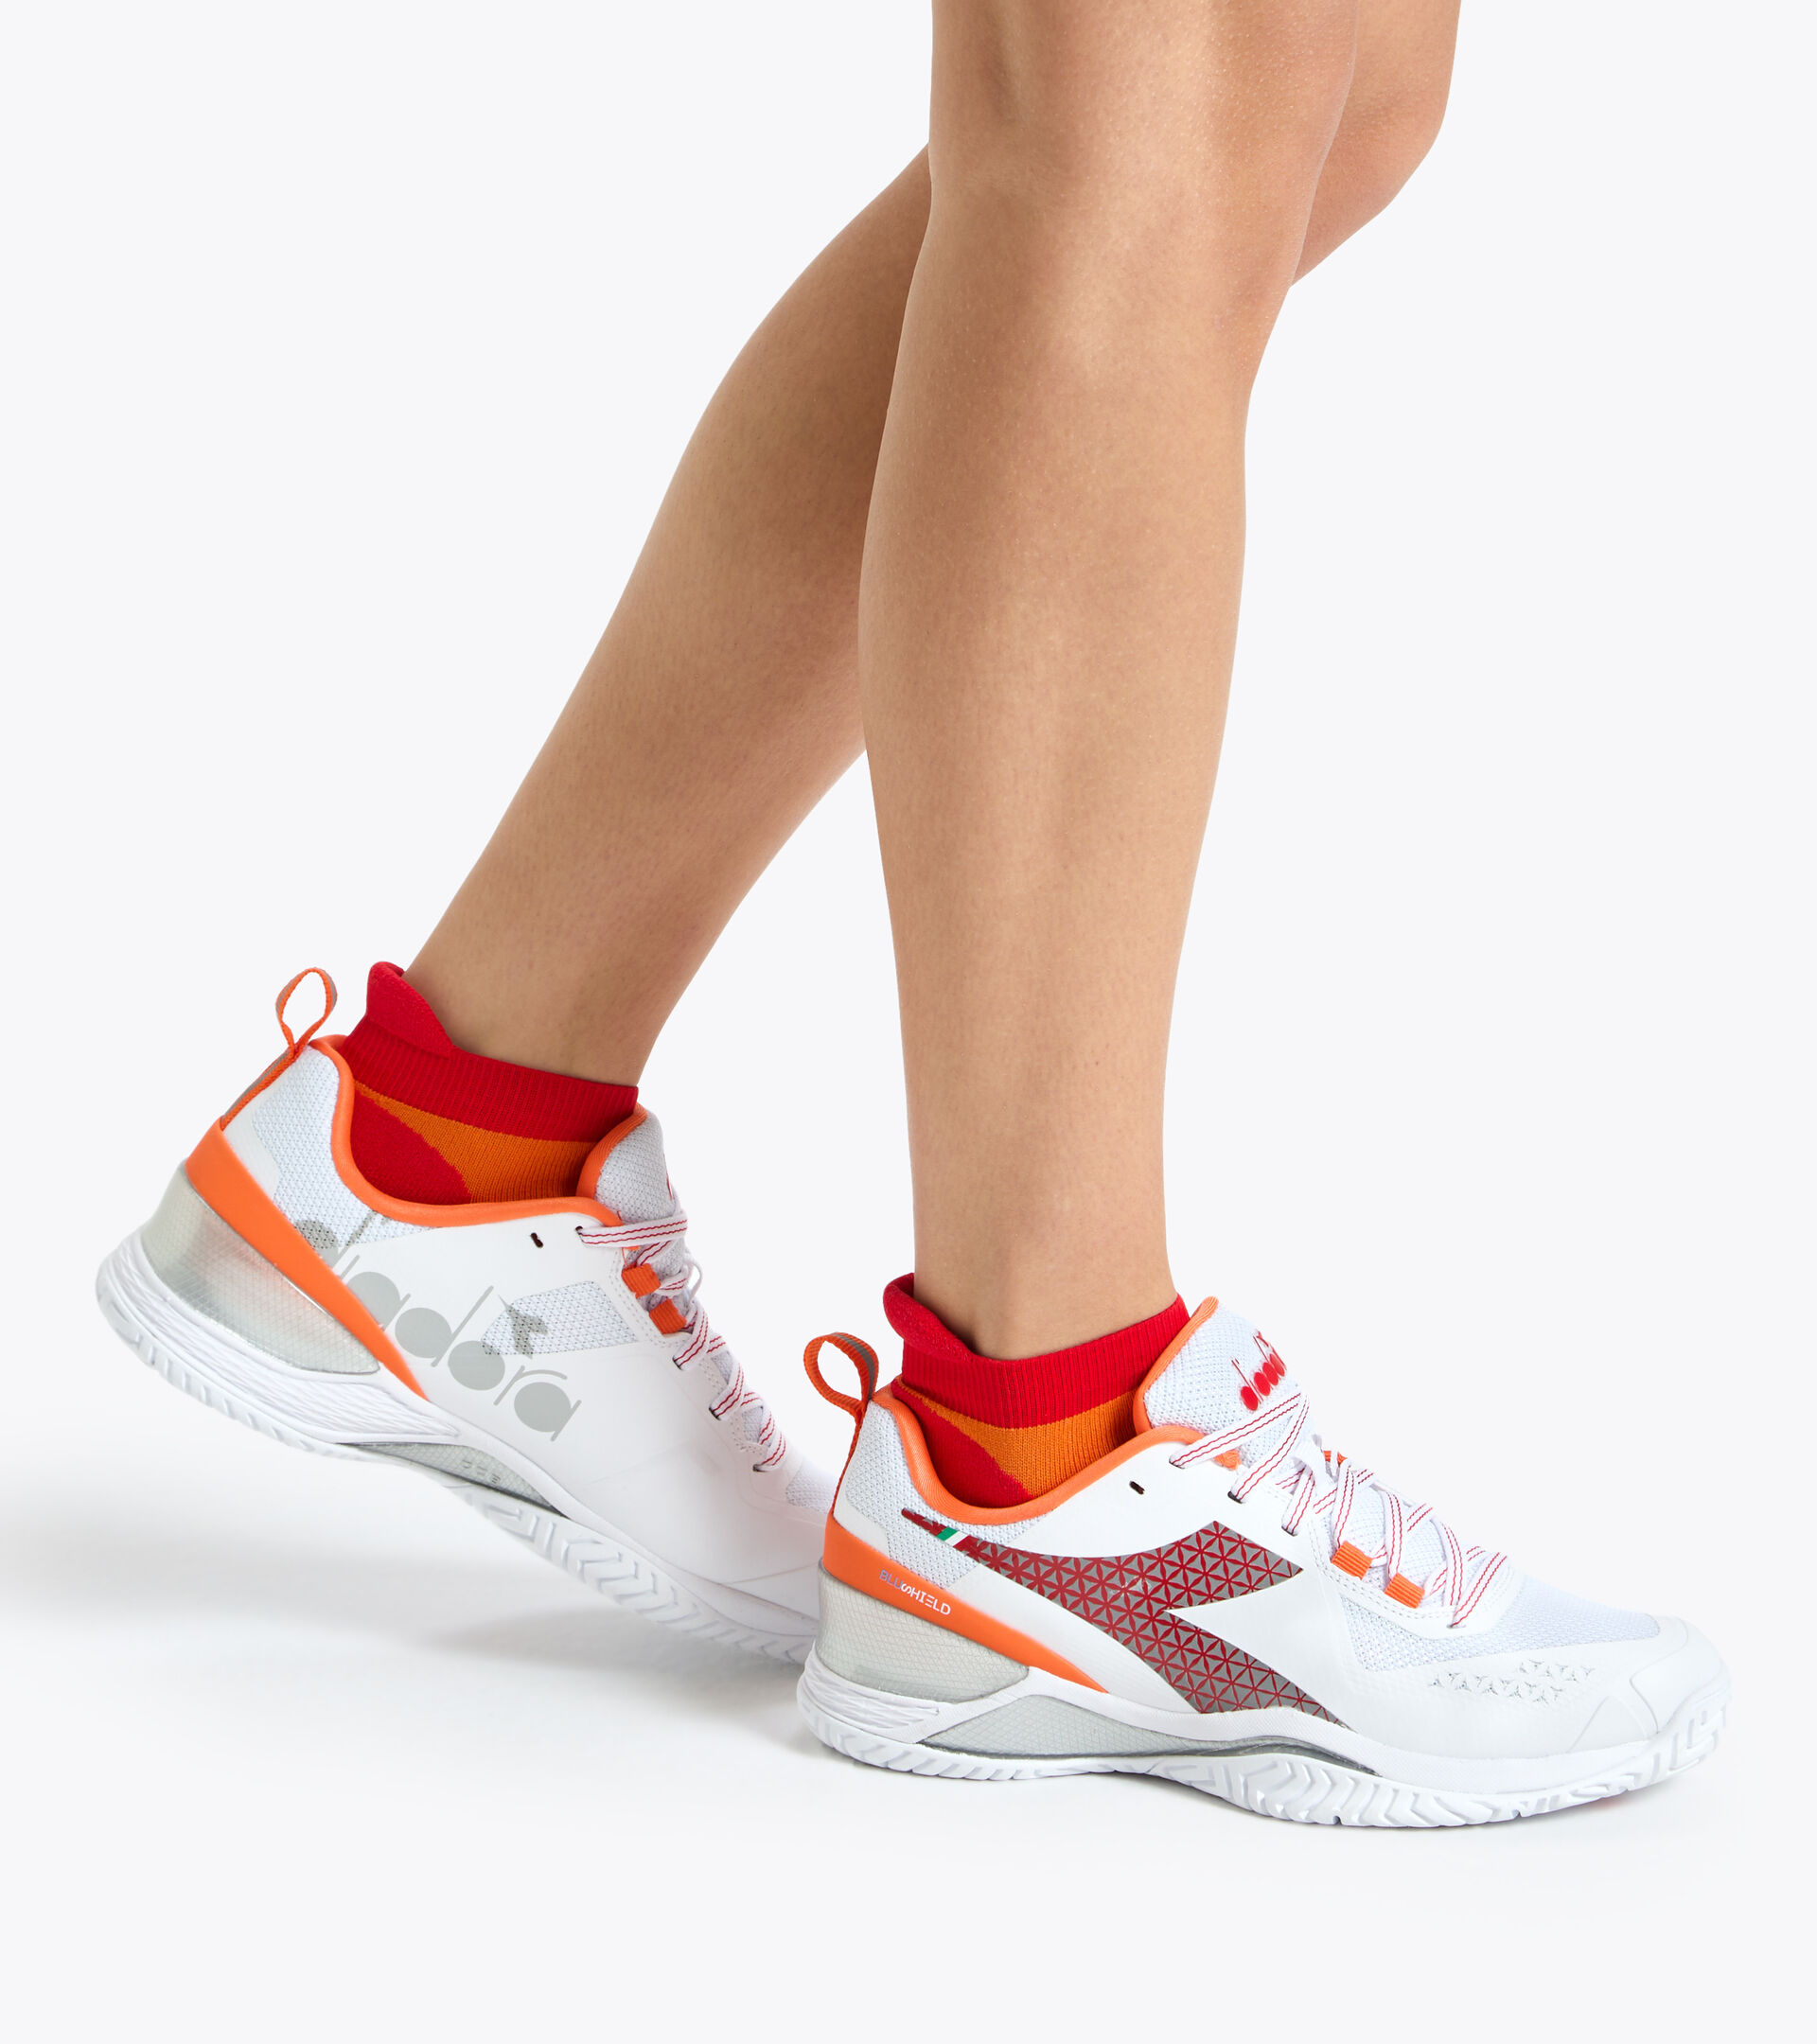 diadora tennis shoes women size 9